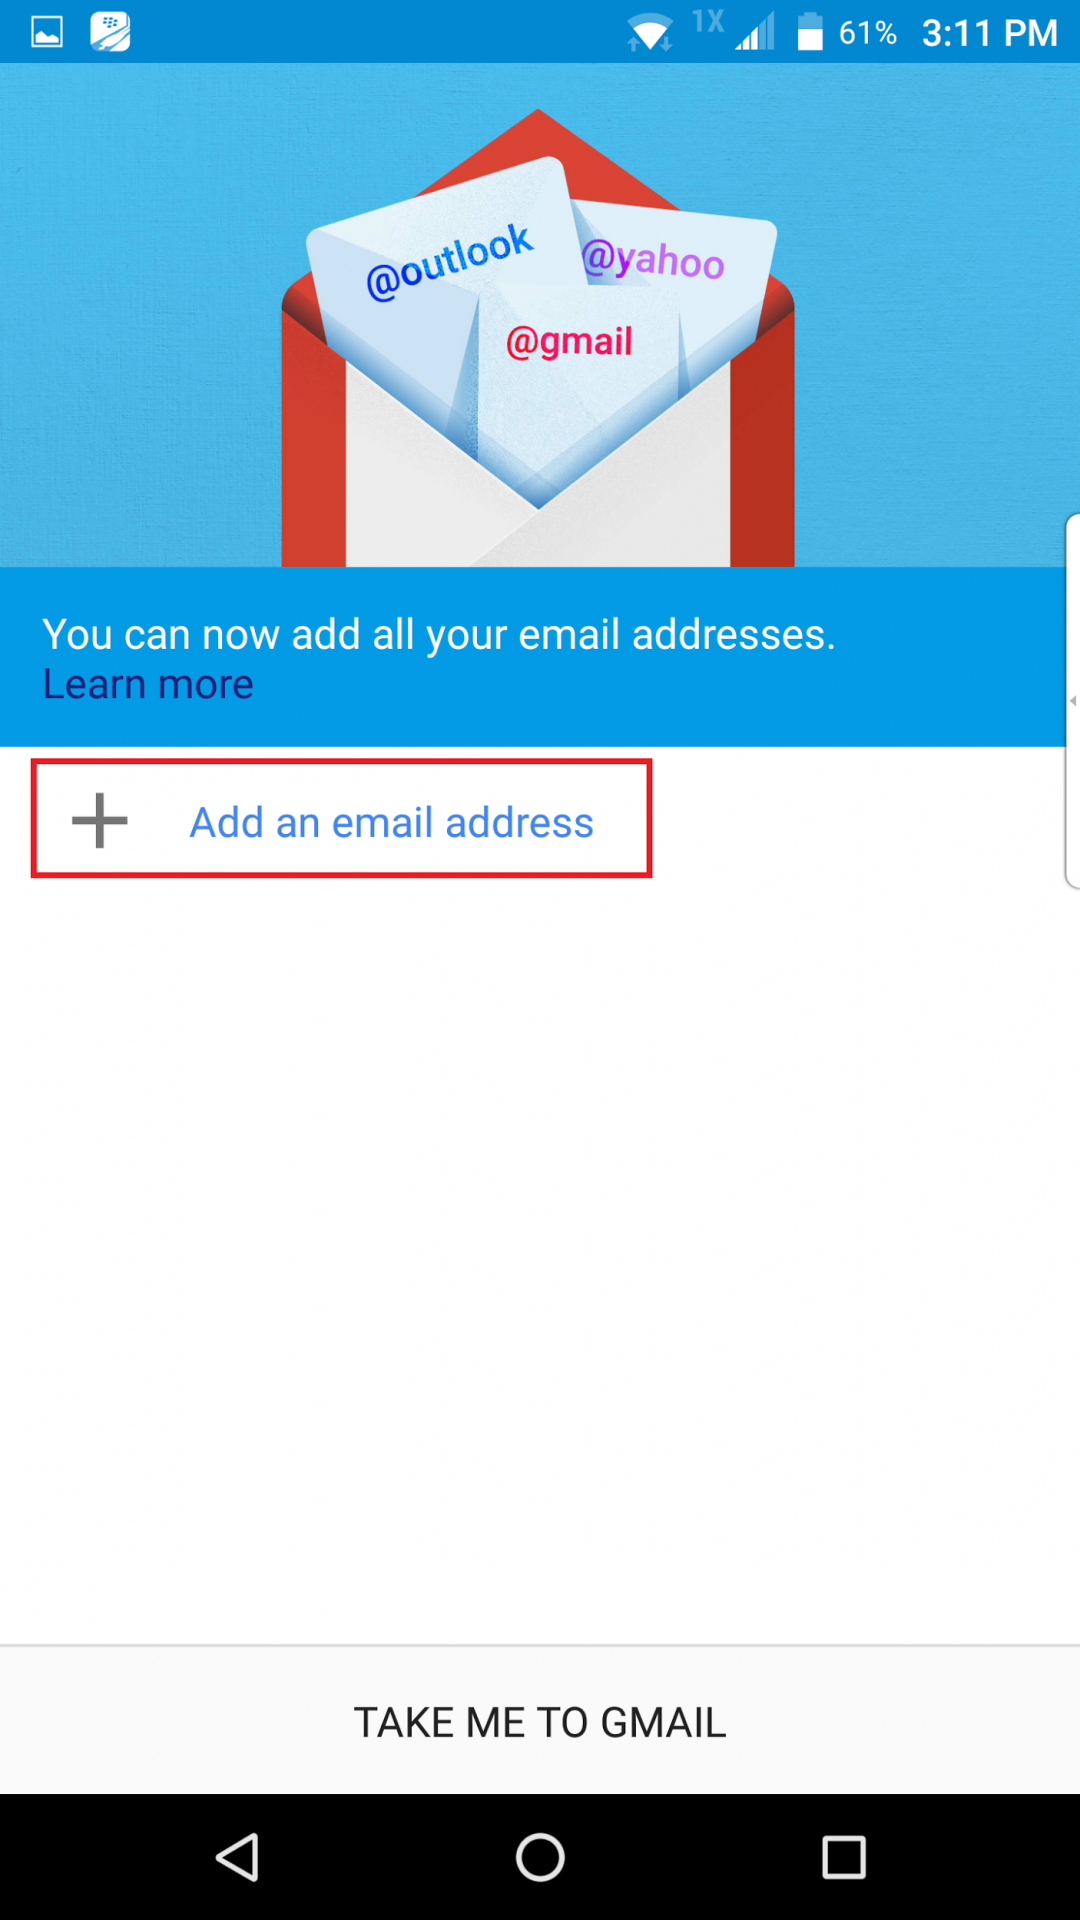 Add an email address option circled